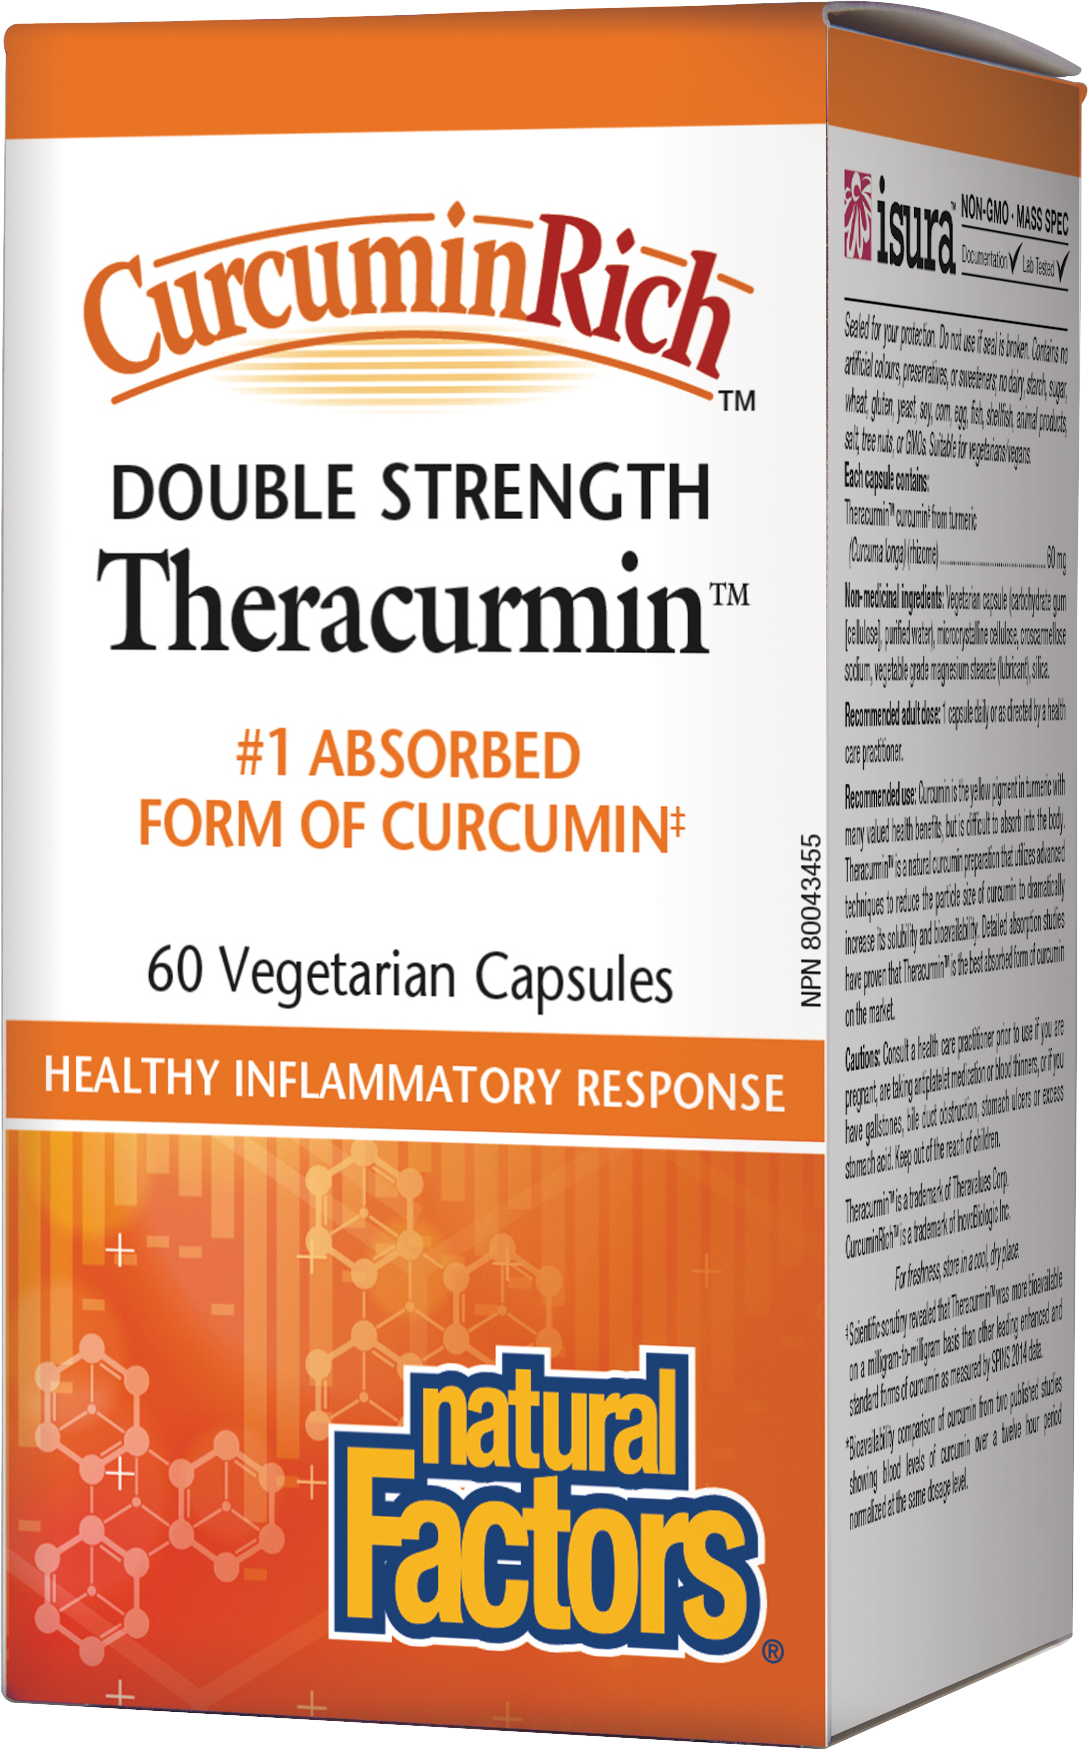 Natural Factors CurcuminRich Theracurmin Double Strength 60mg 60 Vegetarian Capsules